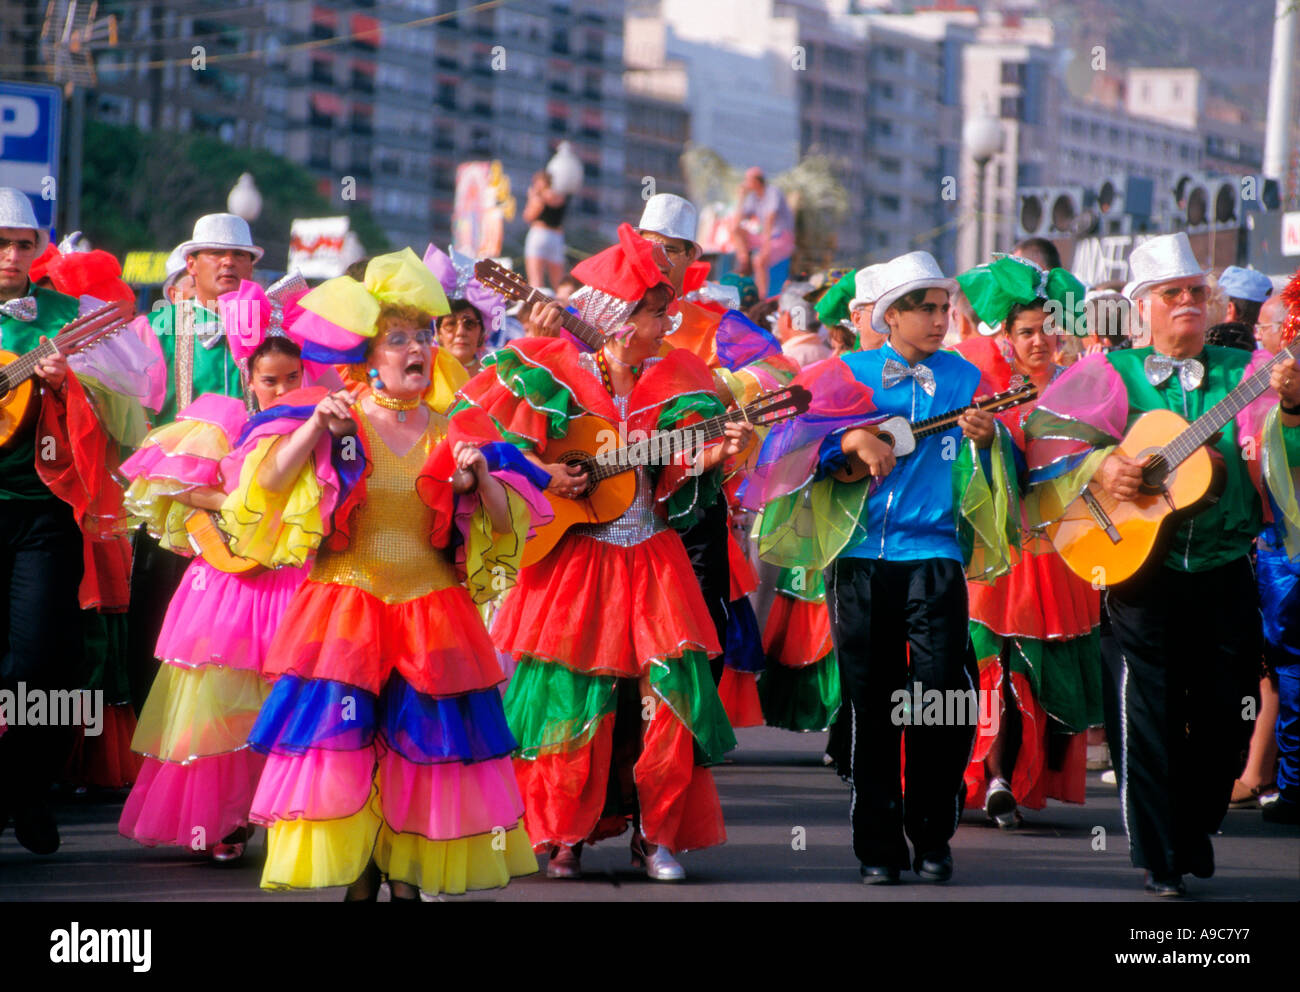 Spain Canary islands Tenerife island Santa Cruz Carnival festival with  colorful costume procession on the street Stock Photo - Alamy